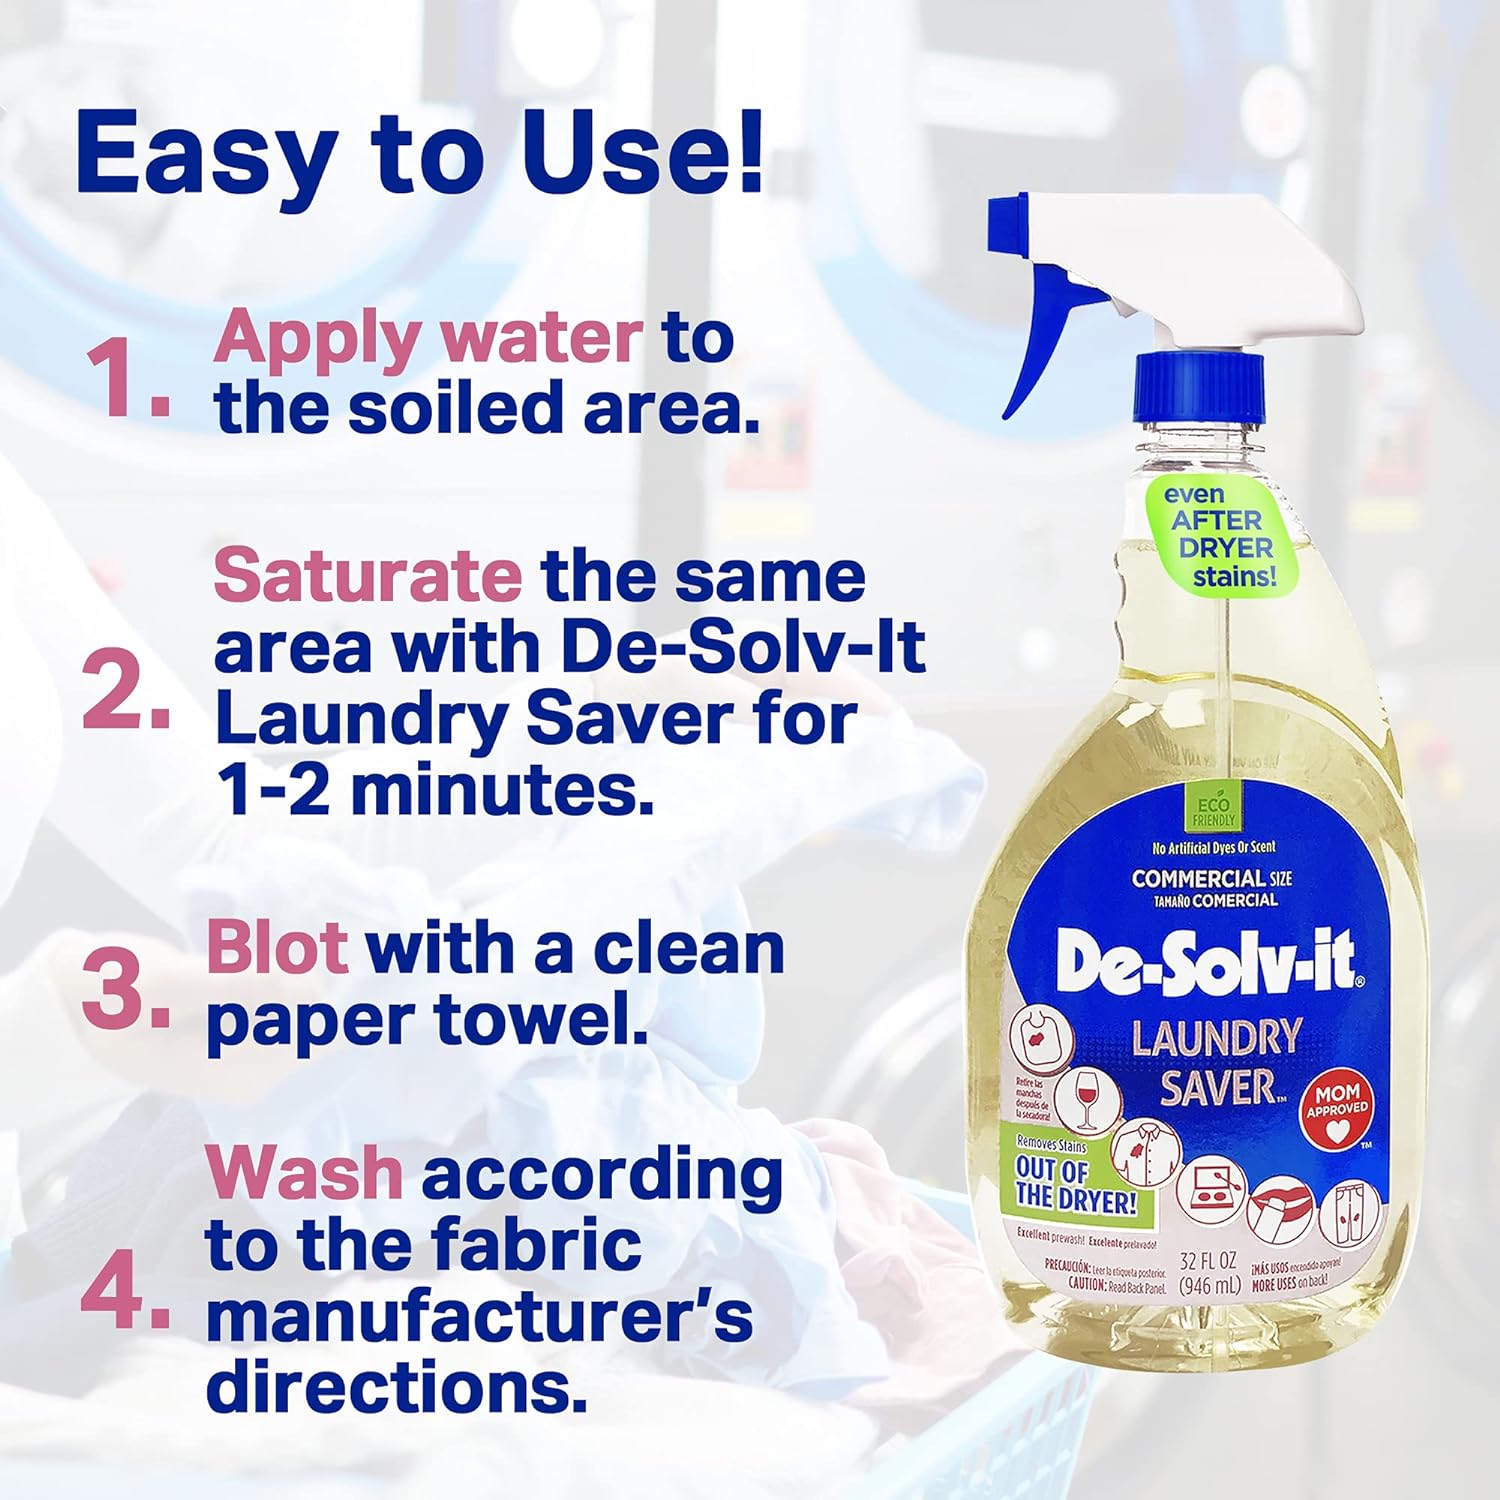 Orange-Sol De-Solv-It Laundry Saver, Odor & Stain Remover for Laundry, Safe on Hair & Skin, 32-Ounce : Health & Household